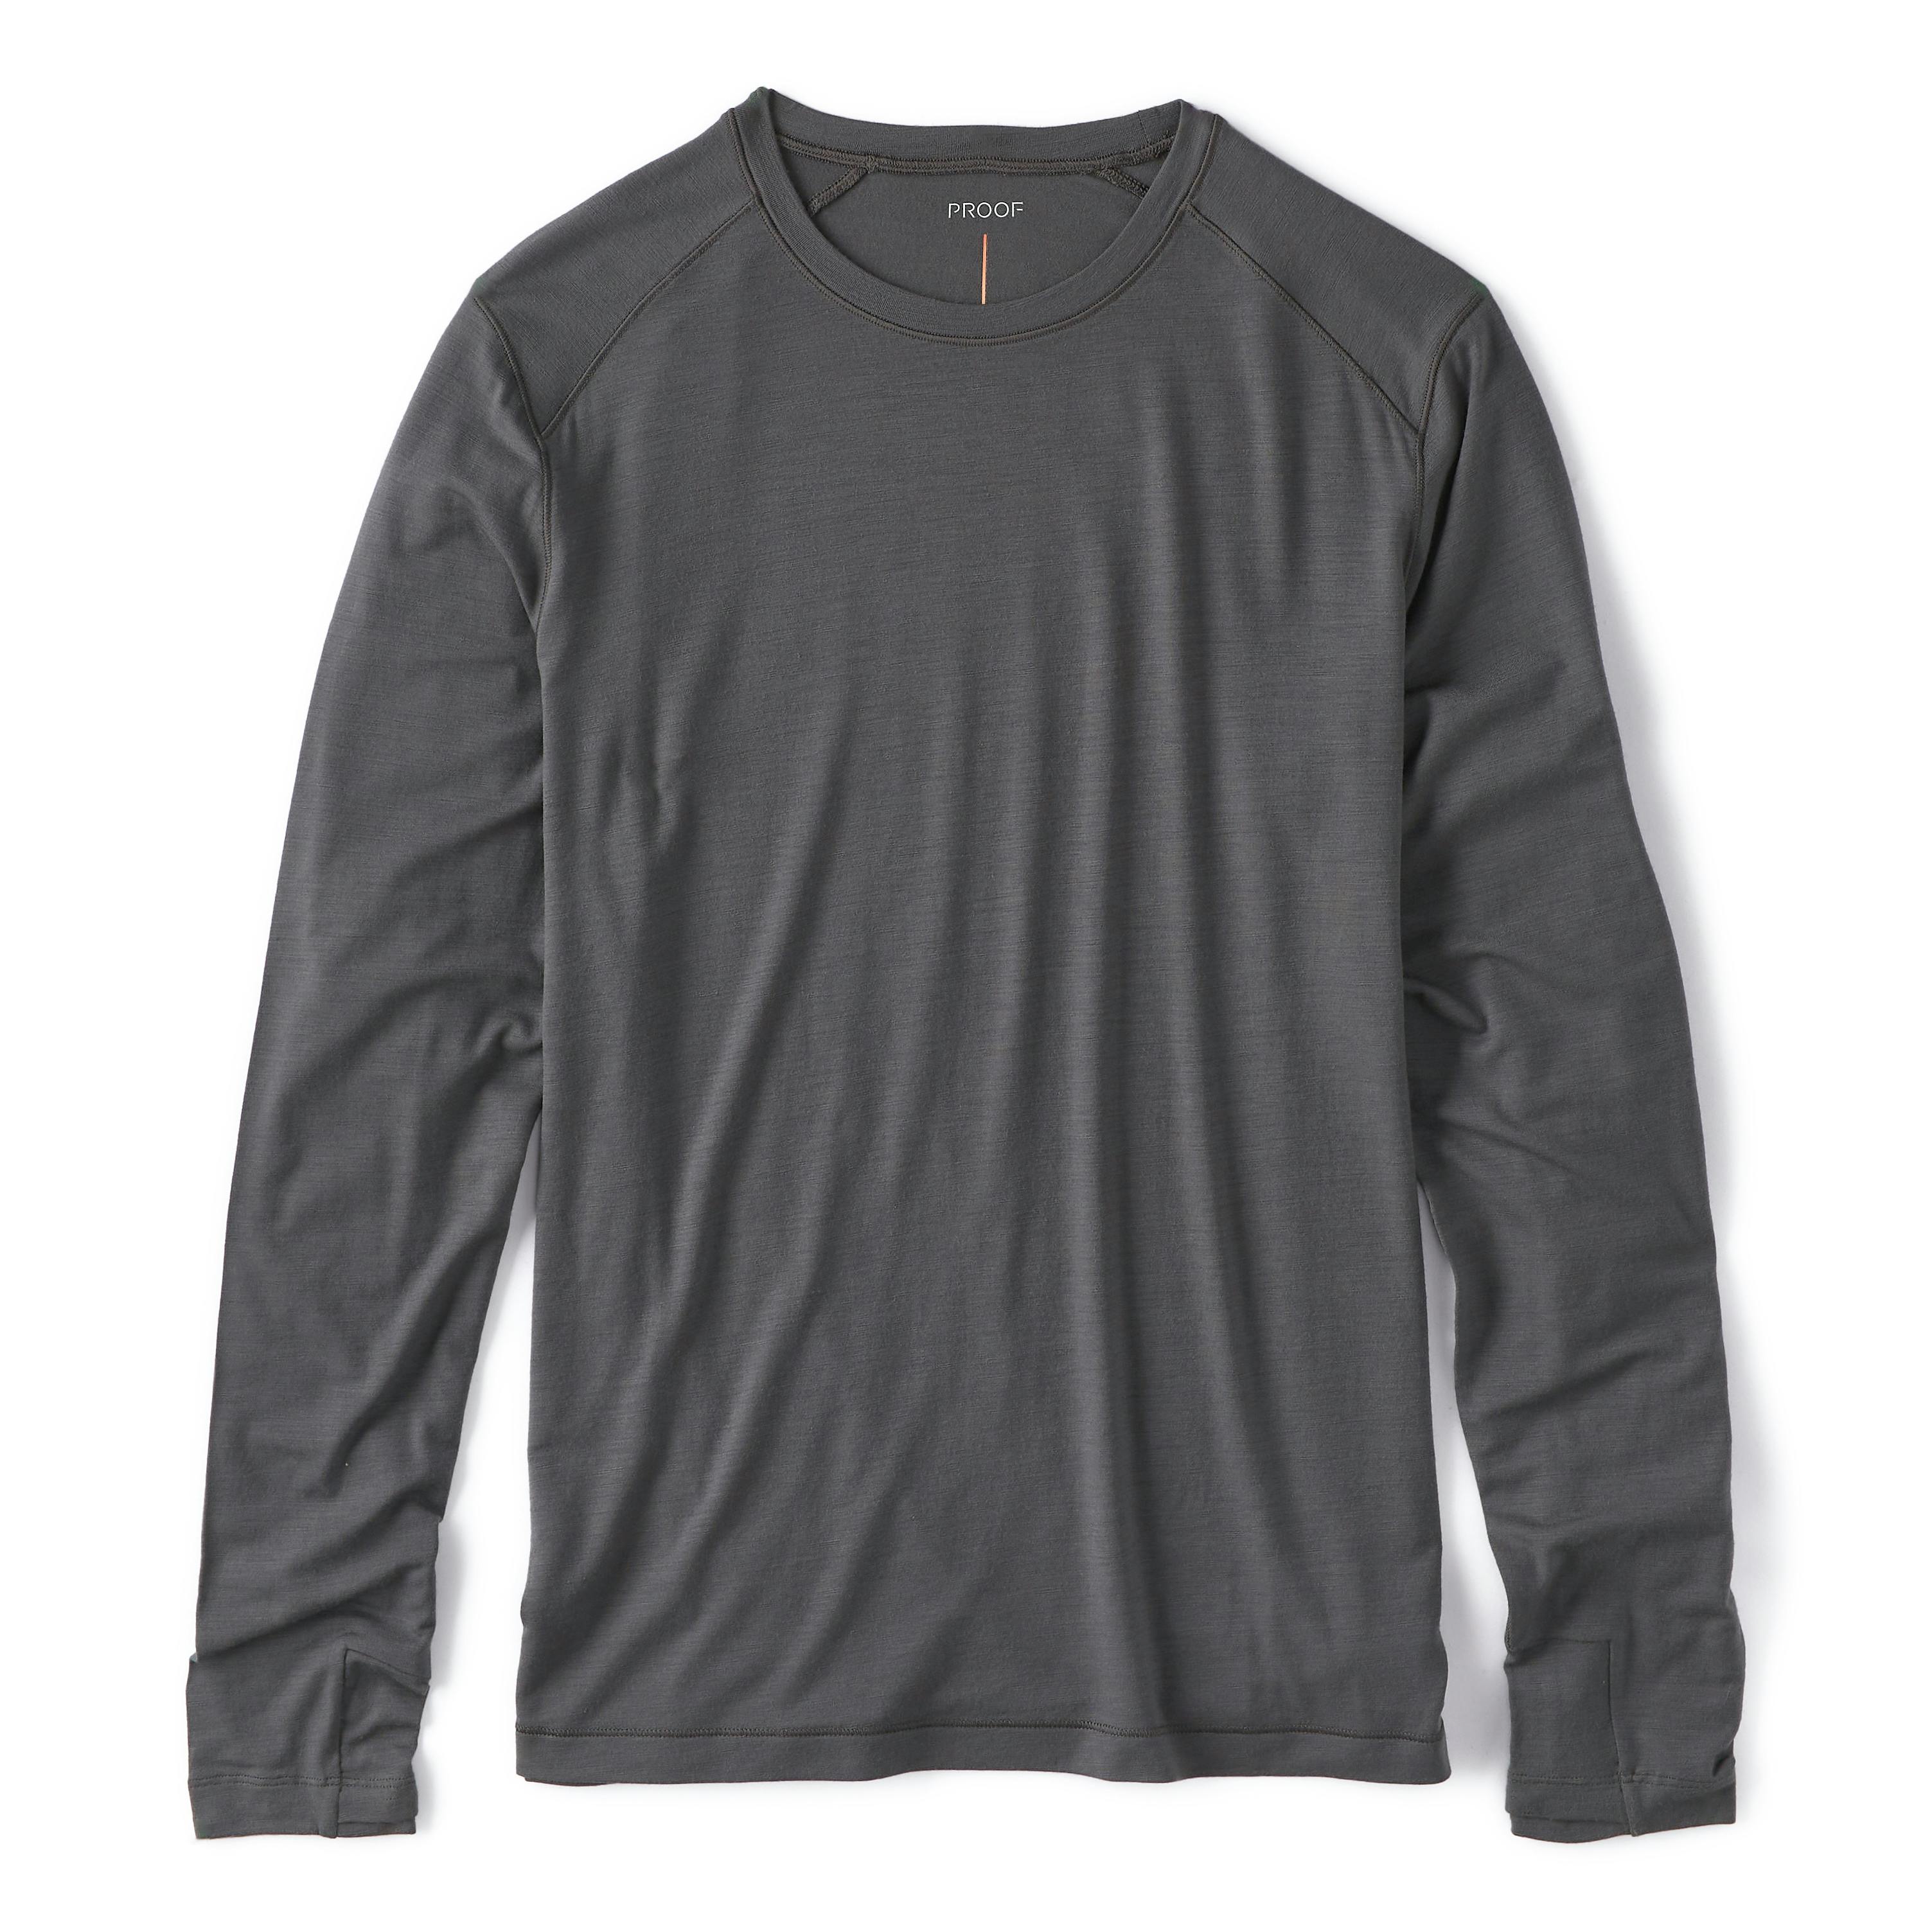 Proof 72-Hour Merino UPF Long Sleeve T-Shirt - Magnet